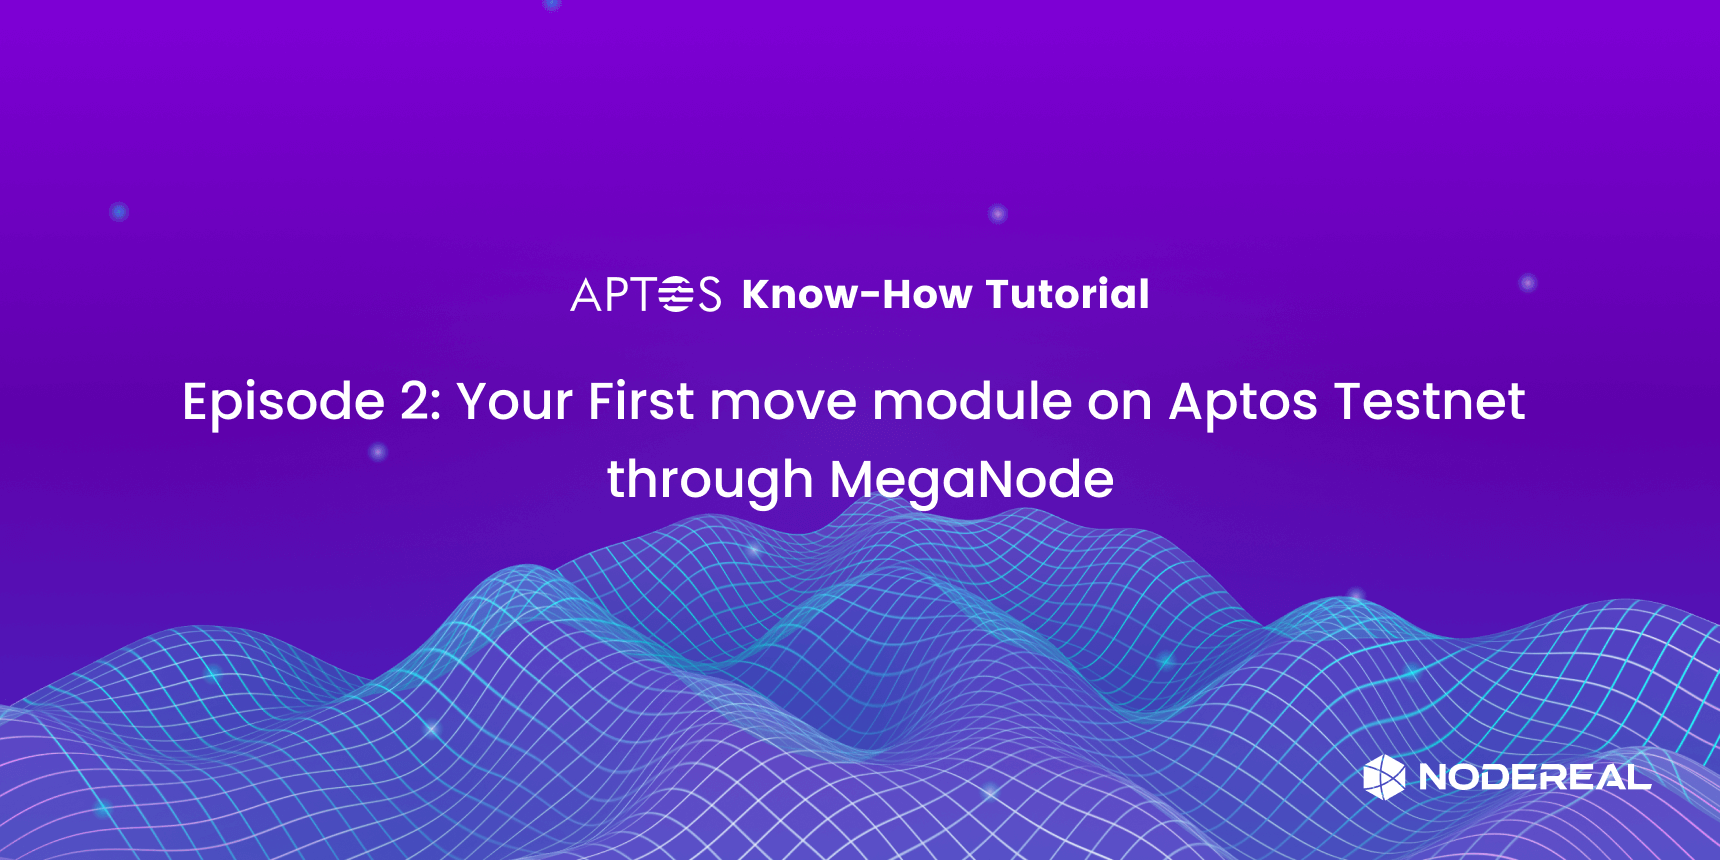 Aptos Know-How Series - Episode 2: Your First Move Module on Aptos Testnet through MegaNode